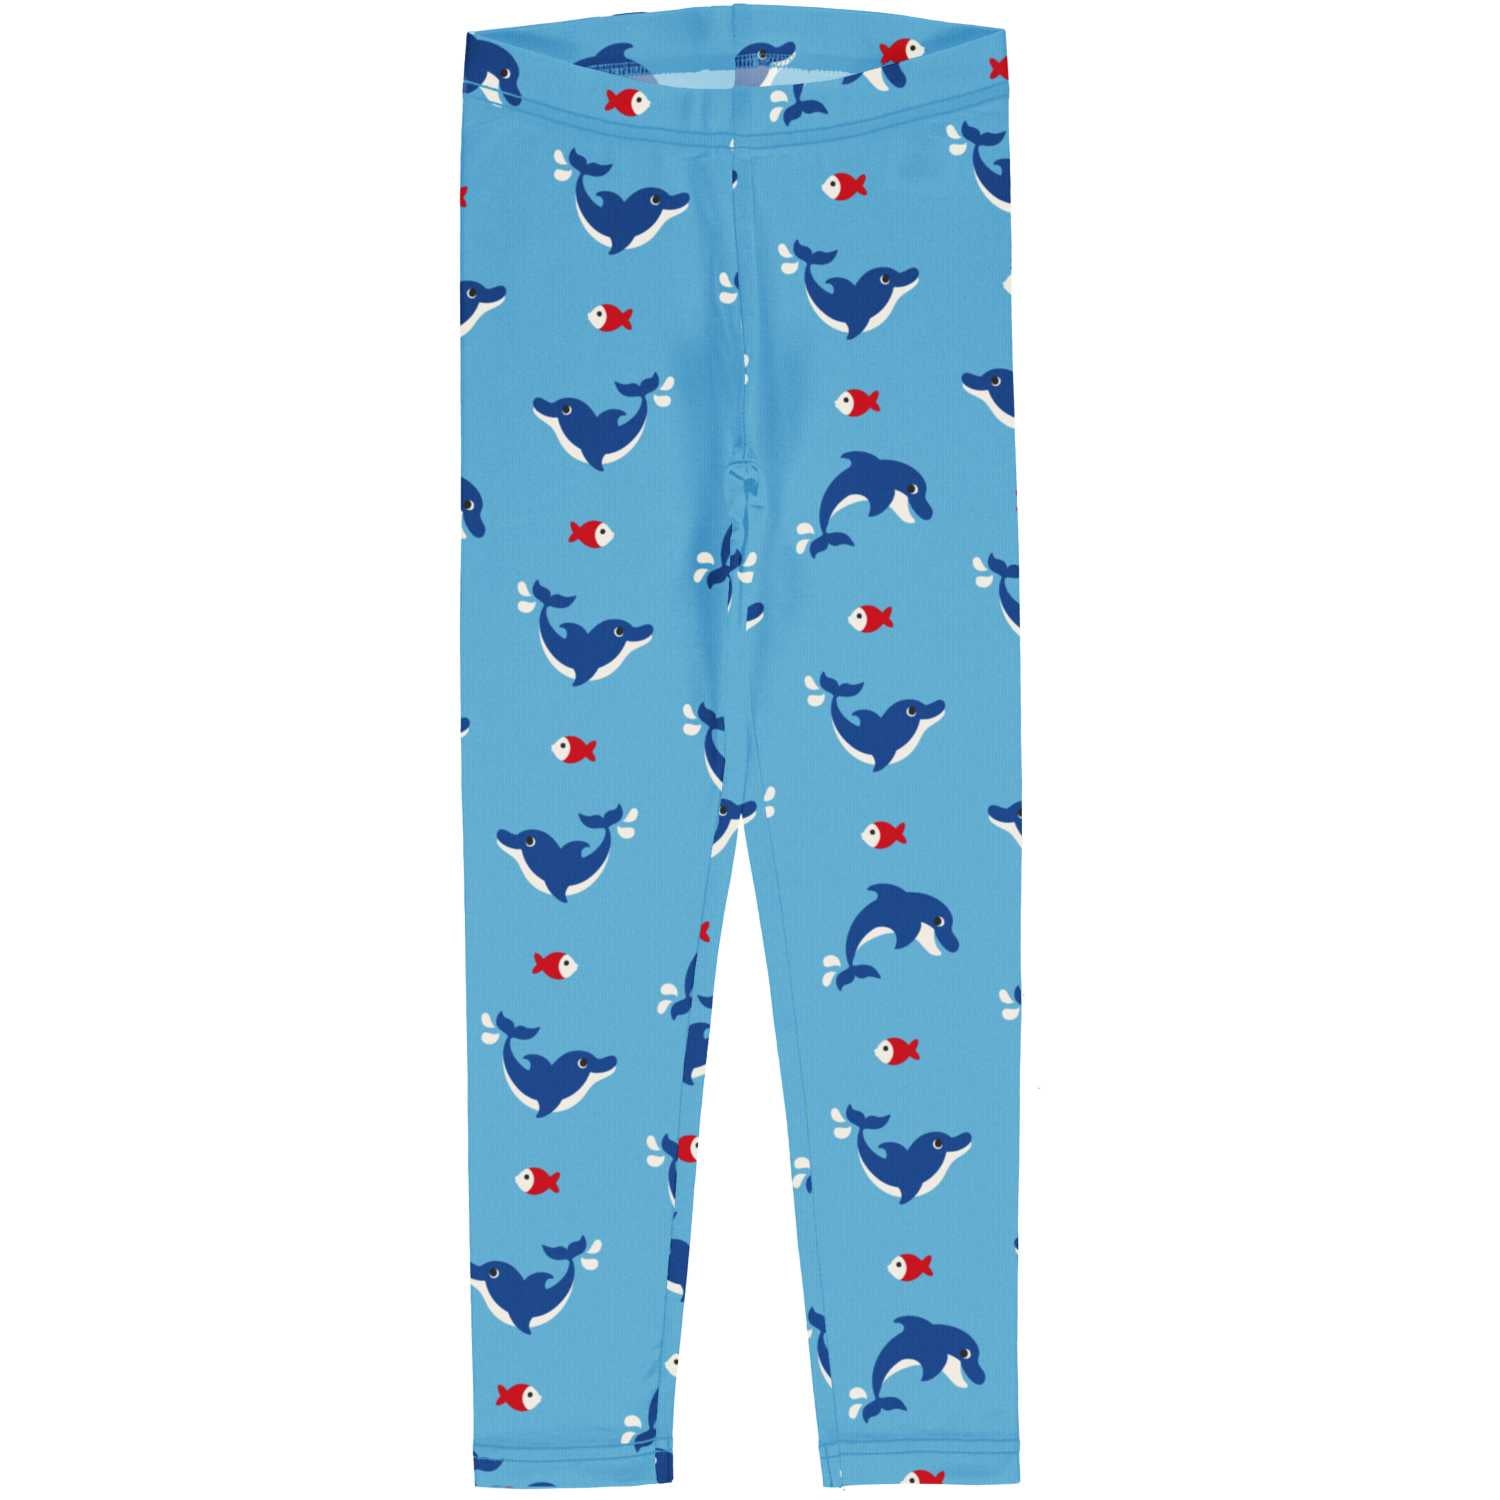 Maxomorra Dolphin Leggings Dxs2409-Sxs2406 Clothing 3-4YRS / Blue,5-6YRS / Blue,7-8YRS / Blue